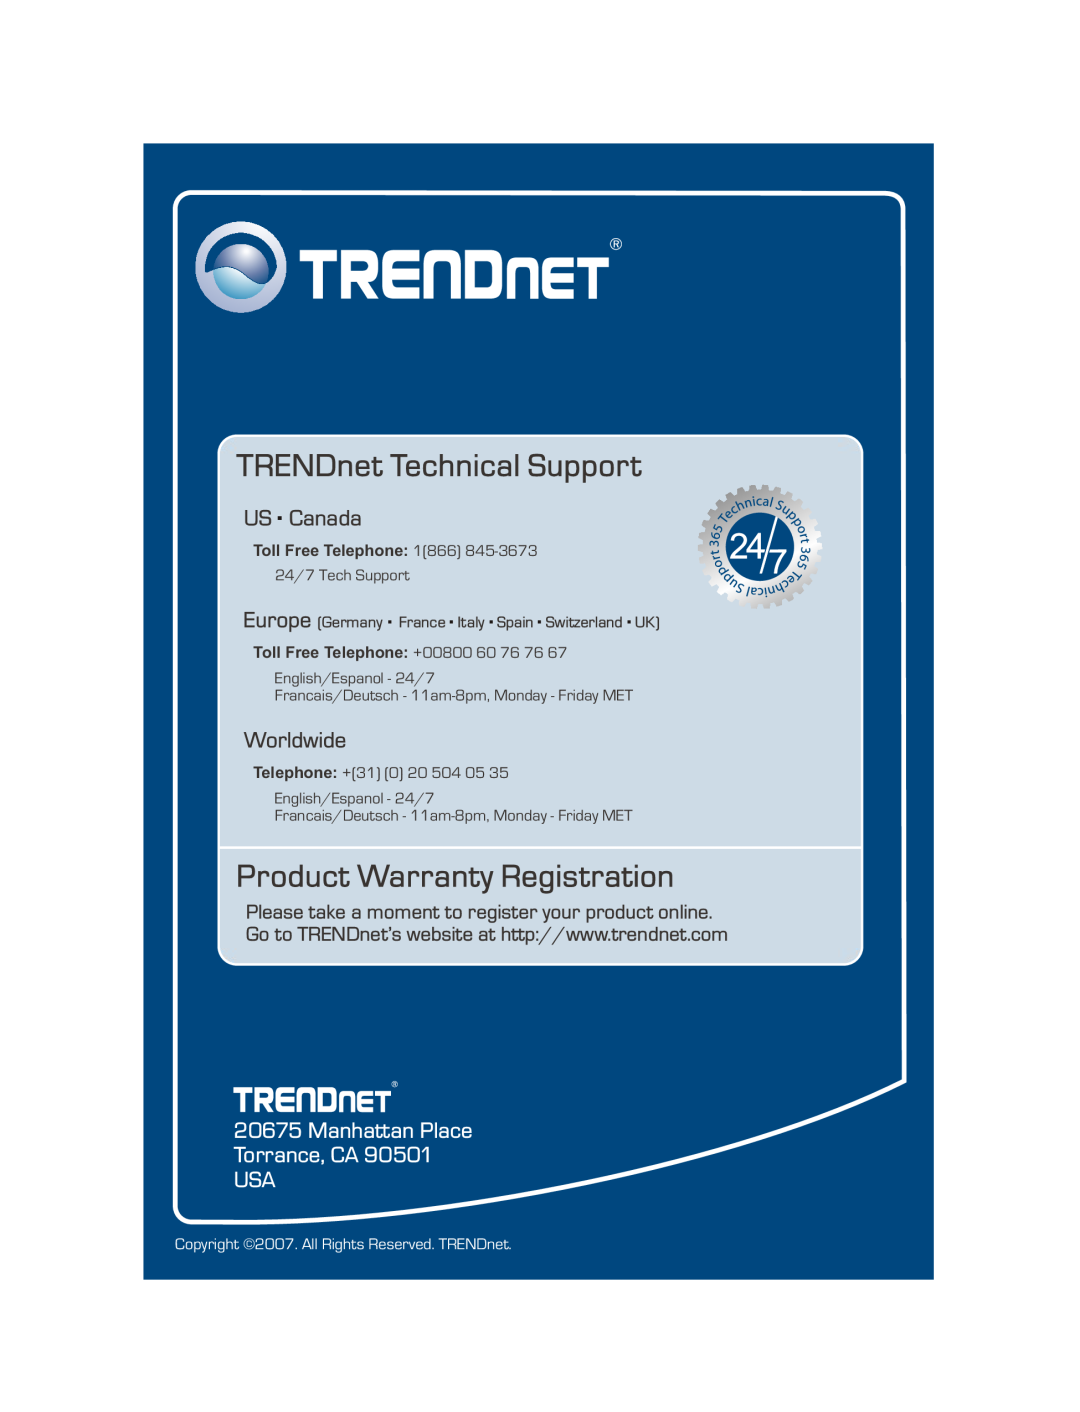 TRENDnet TEG-S5 Manhattan Place Torrance, CA USA, TRENDnet Technical Support, Product Warranty Registration, US . Canada 